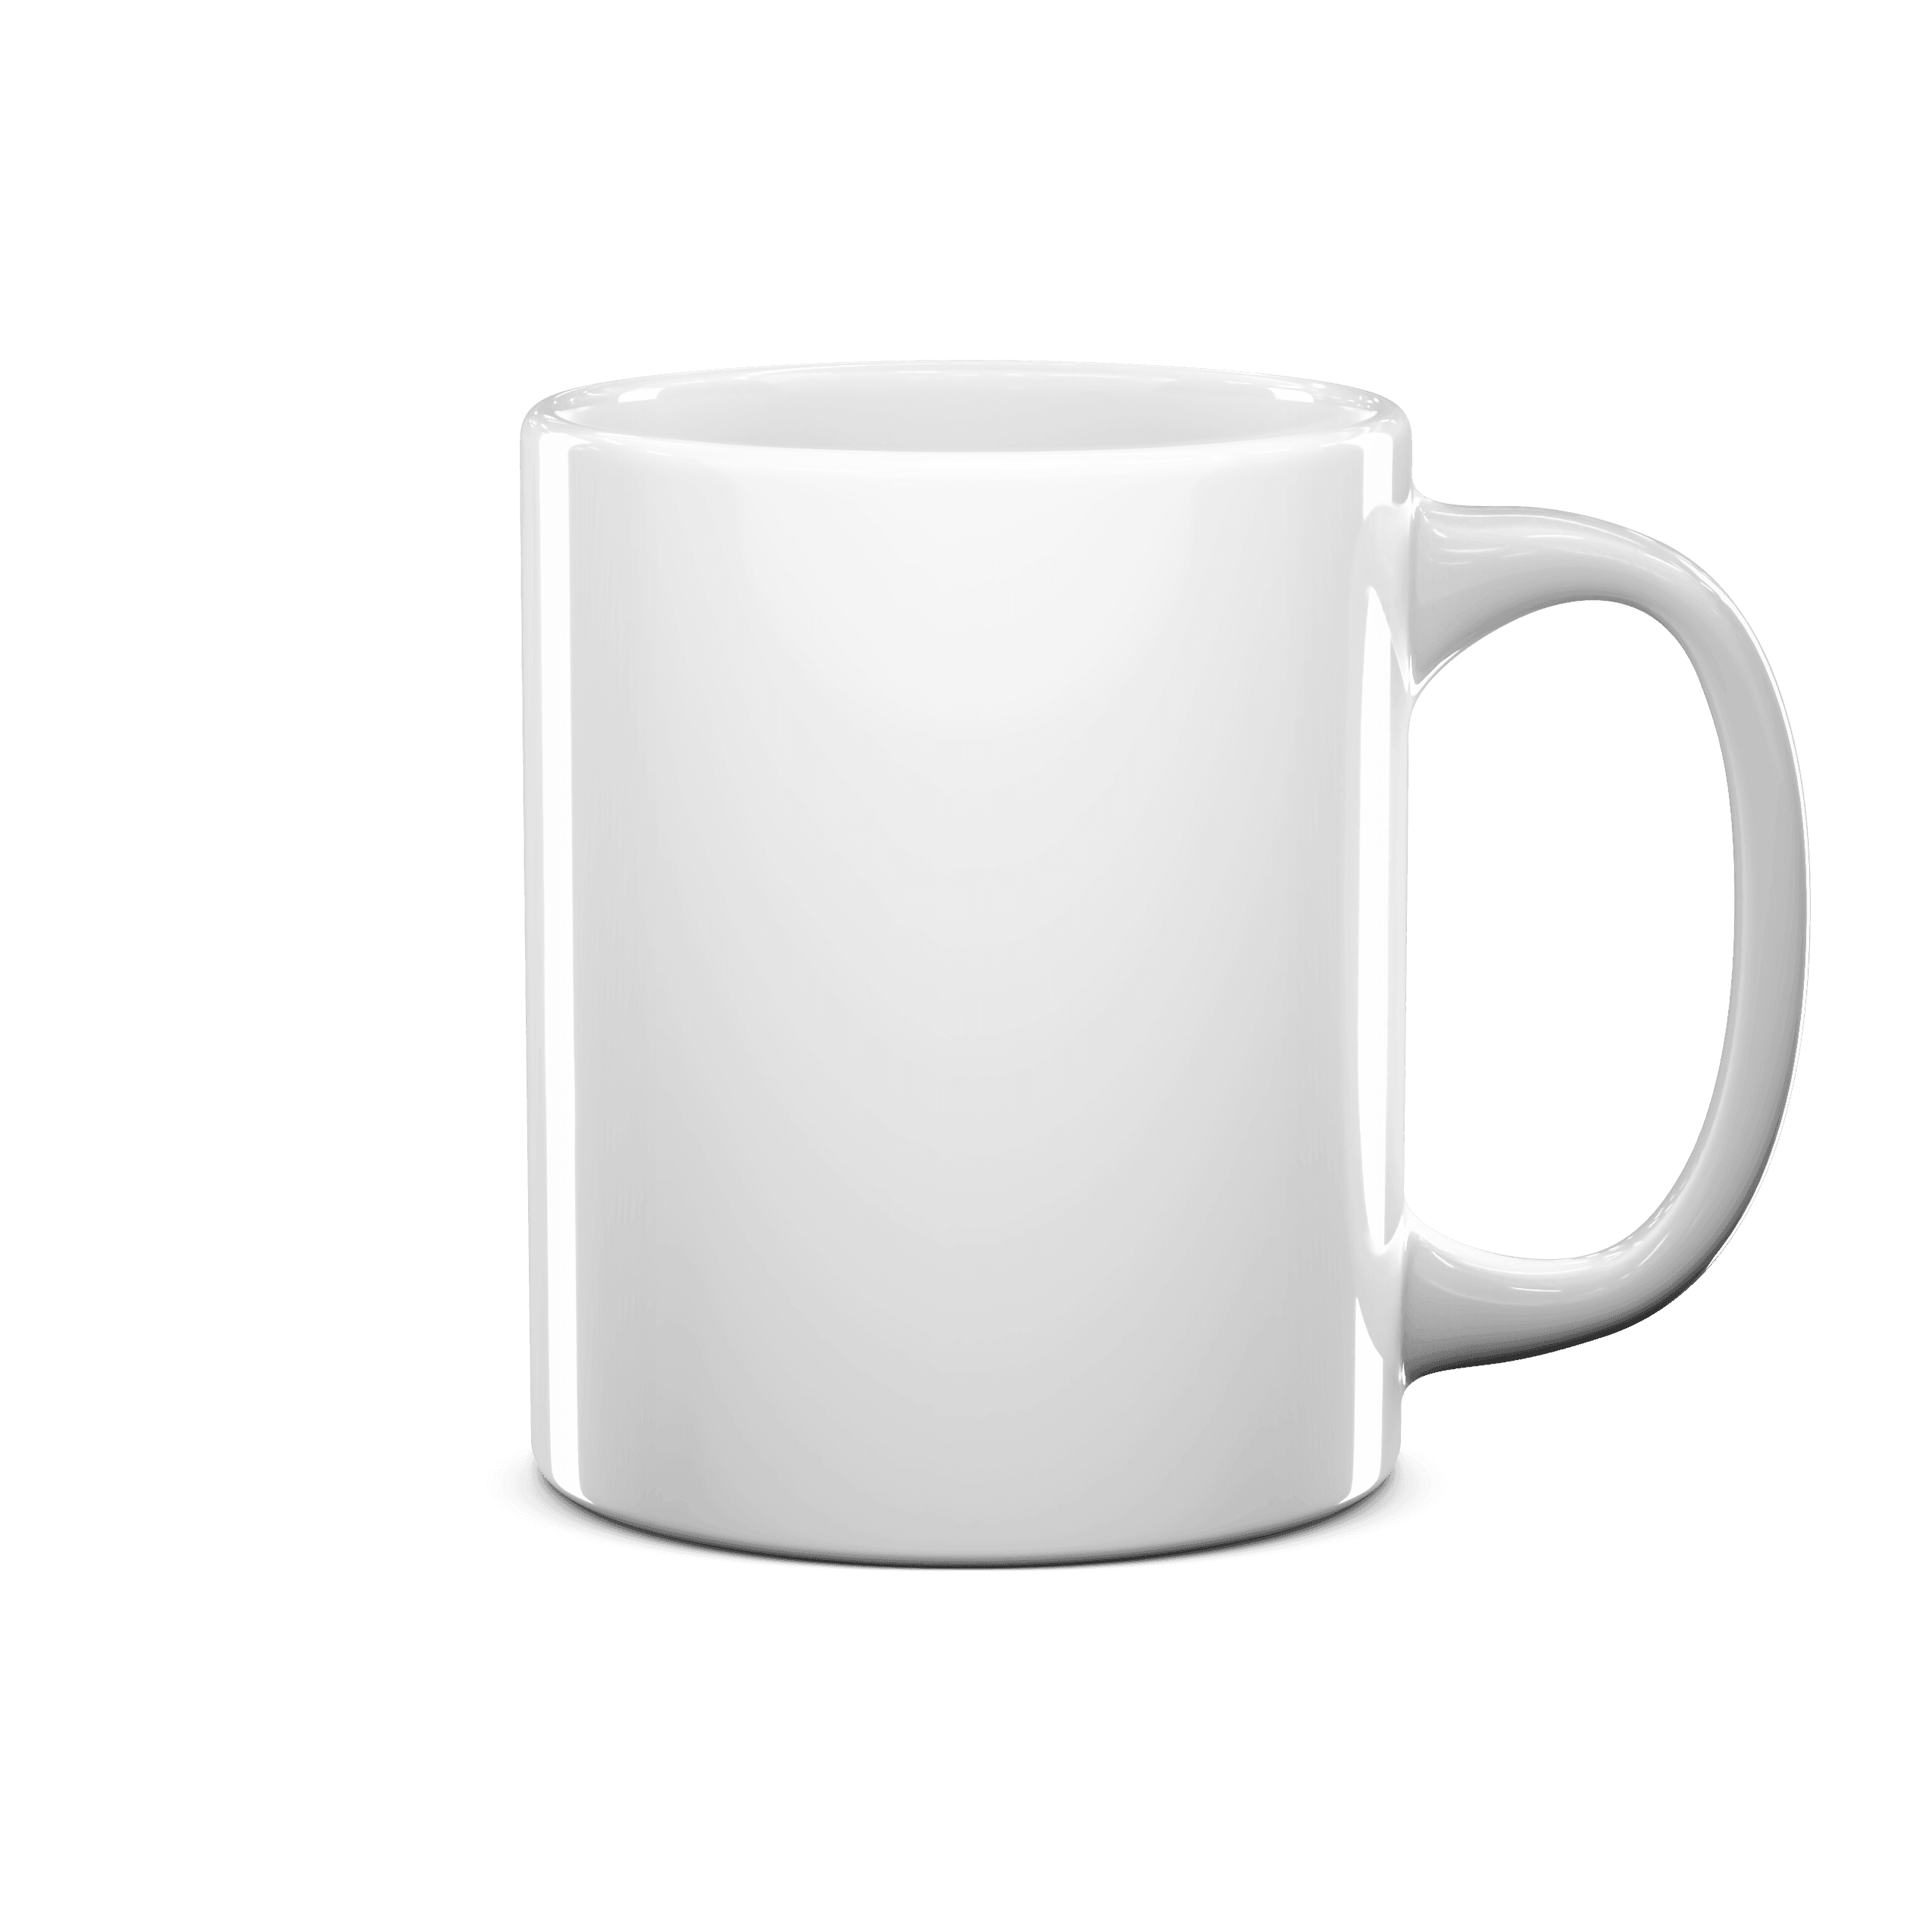  Blaze Coffee Mug - 11 oz. - 24 hr 146048-24HR